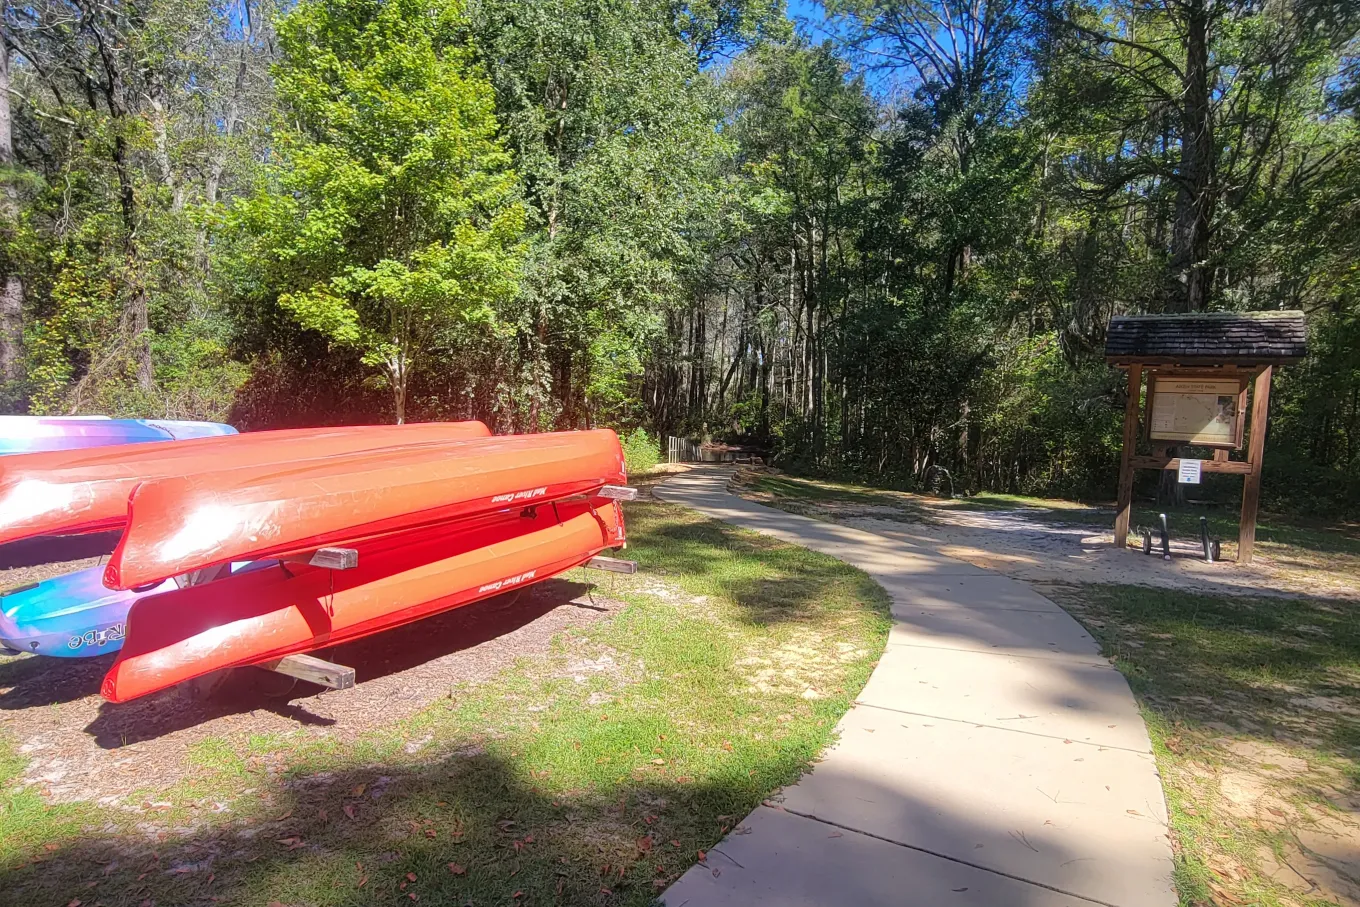 kayaks waiting to be used